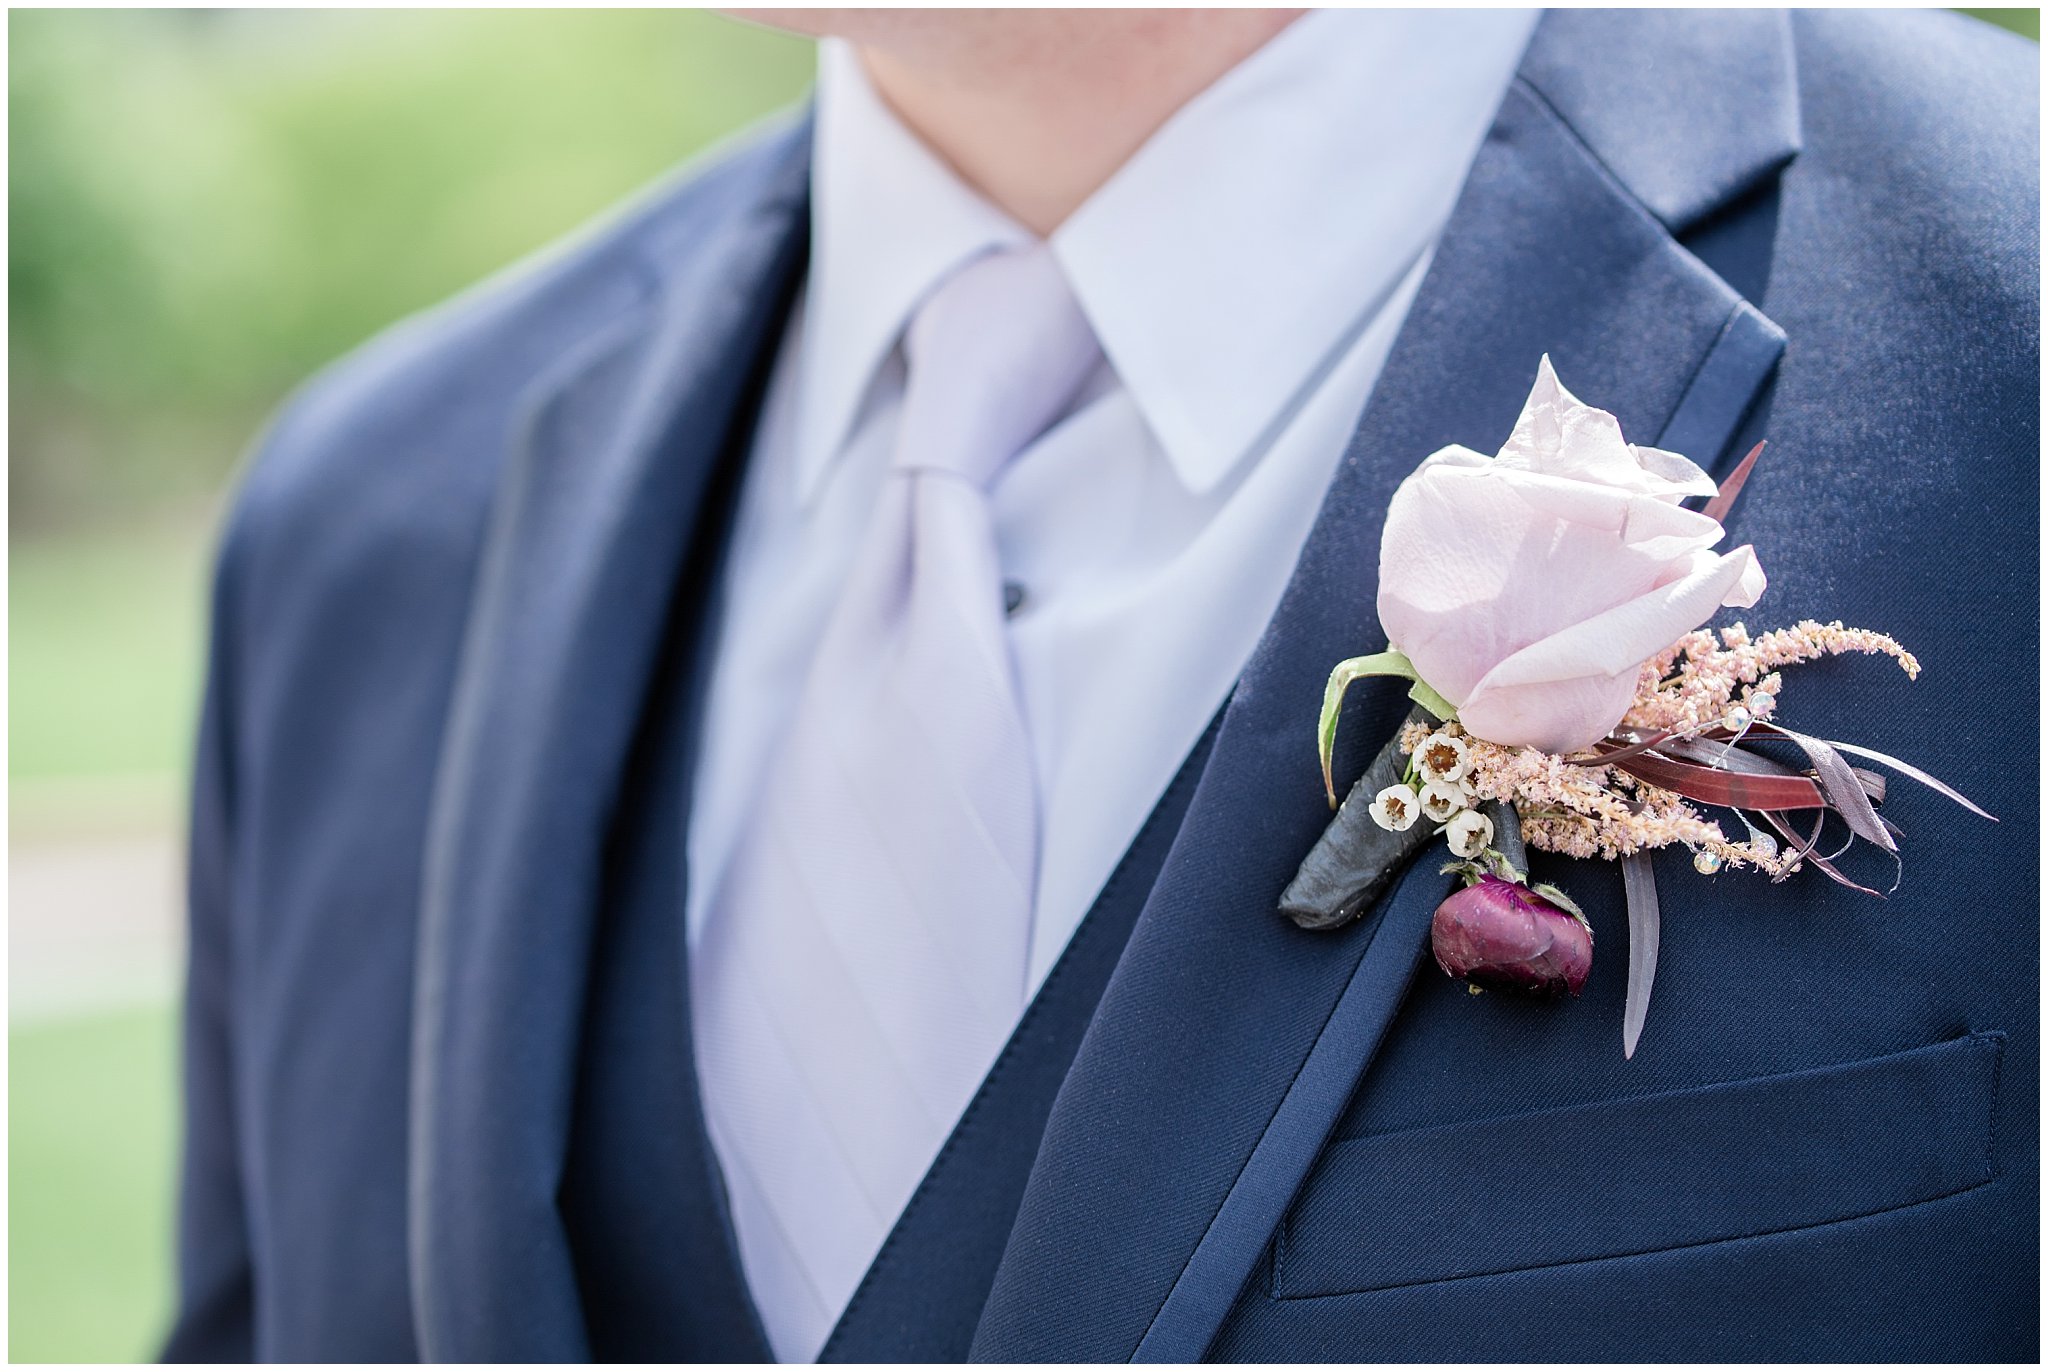 Men's wear for wedding | Wedding suit | Wedding Tux | Boutonnieredetail | Jessie and Dallin Photography 